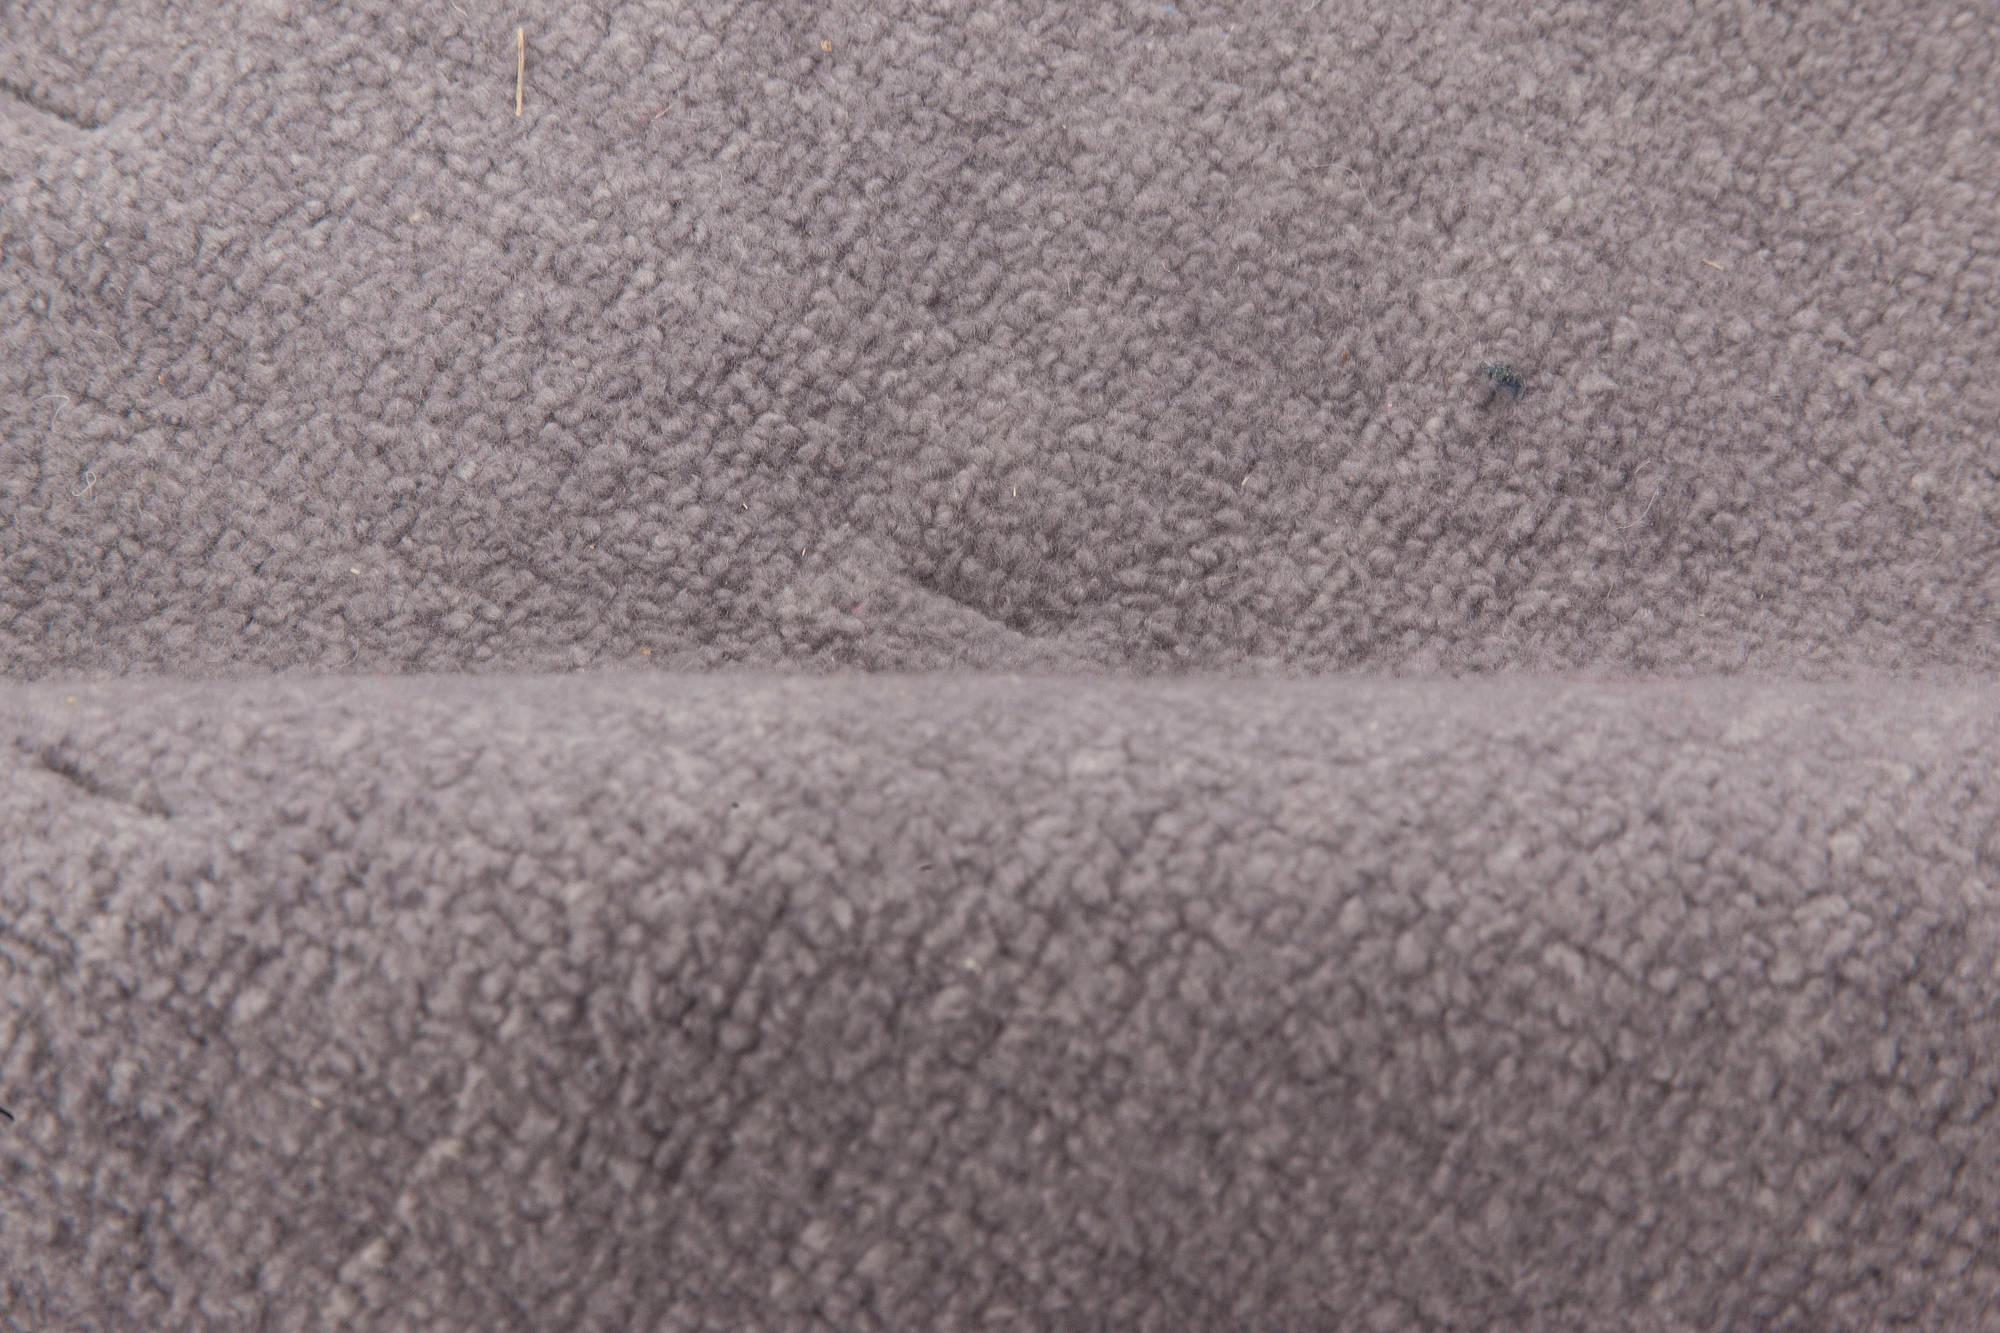 Contemporary Nuno felt grey rug by Doris Leslie Blau
Size: 7'5